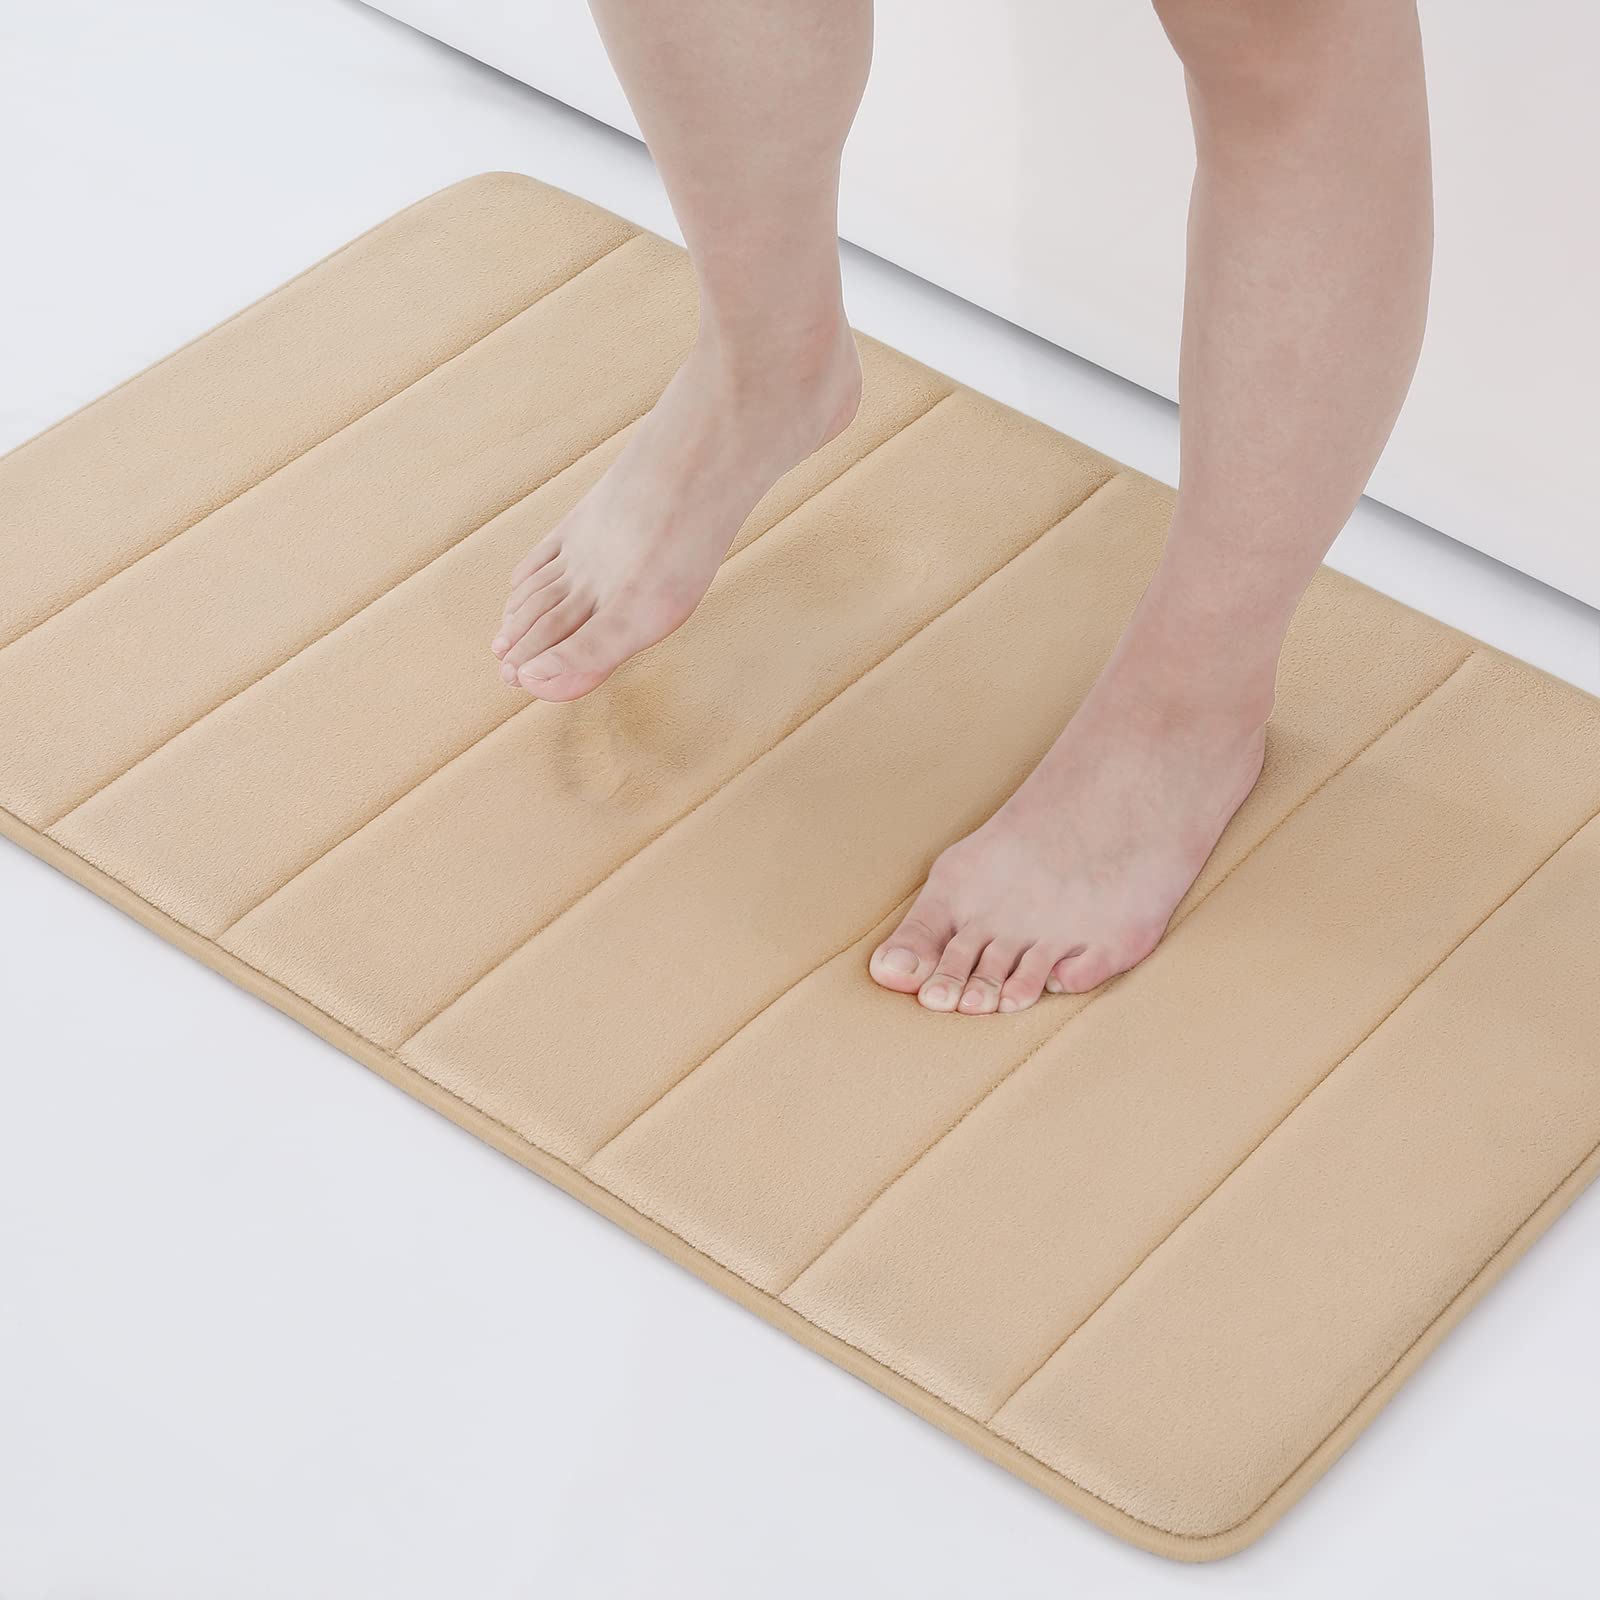 Memory Foam Bath Mat Anti-Slip Shower Carpet Soft Foot Pad Decoration Floor Protector Absorbent Quick Dry Bathroom Rug Mats & Rugs DailyAlertDeals 43x61cm(17x24inch) China beige 2